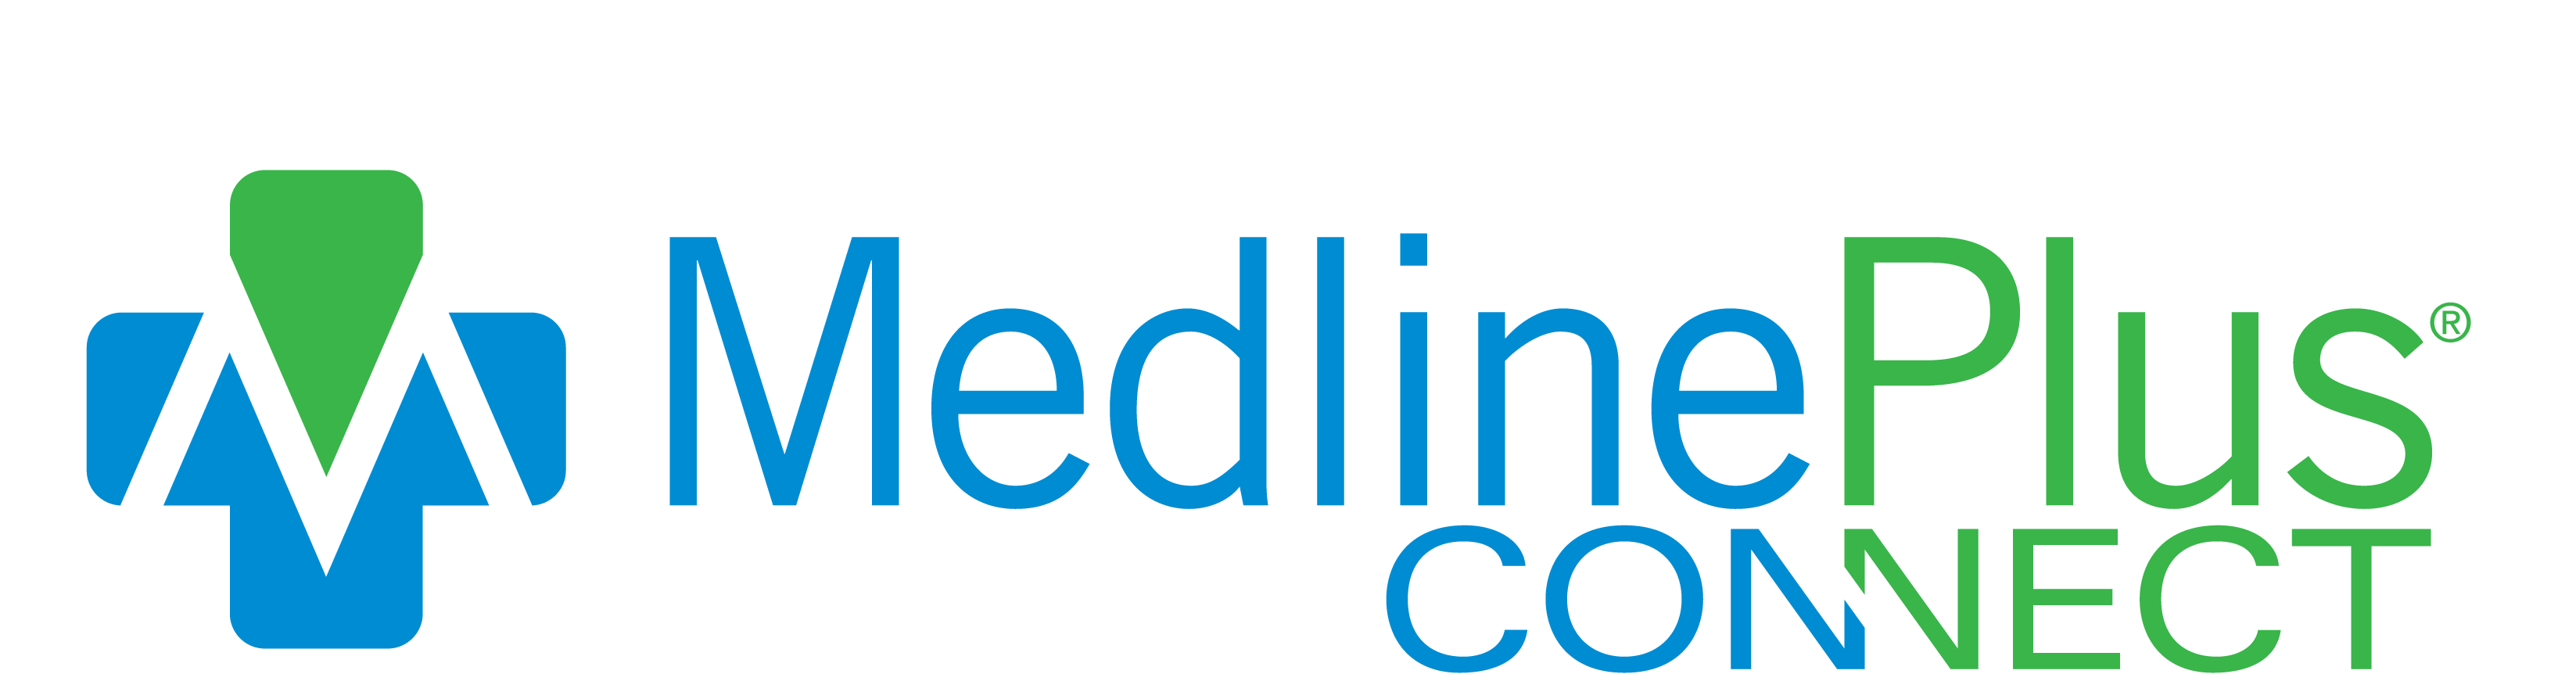 MEDLINEPLUS. Медлайн логотип. National Library of Medicine. National Library of Medicine logo. Trusted connection